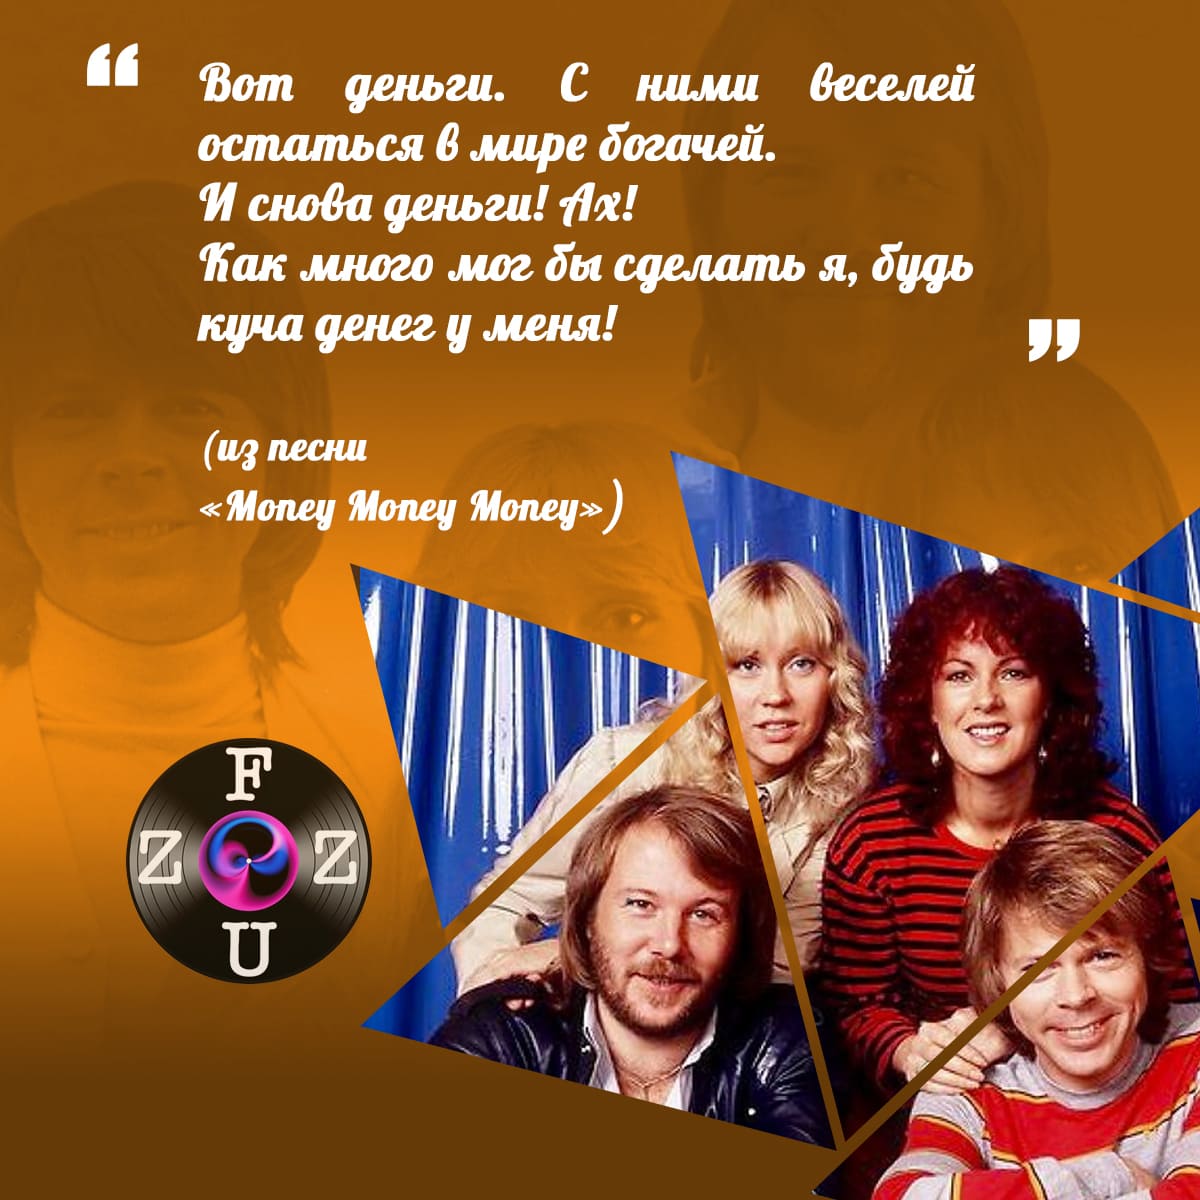 Citations de chansons d'ABBA...